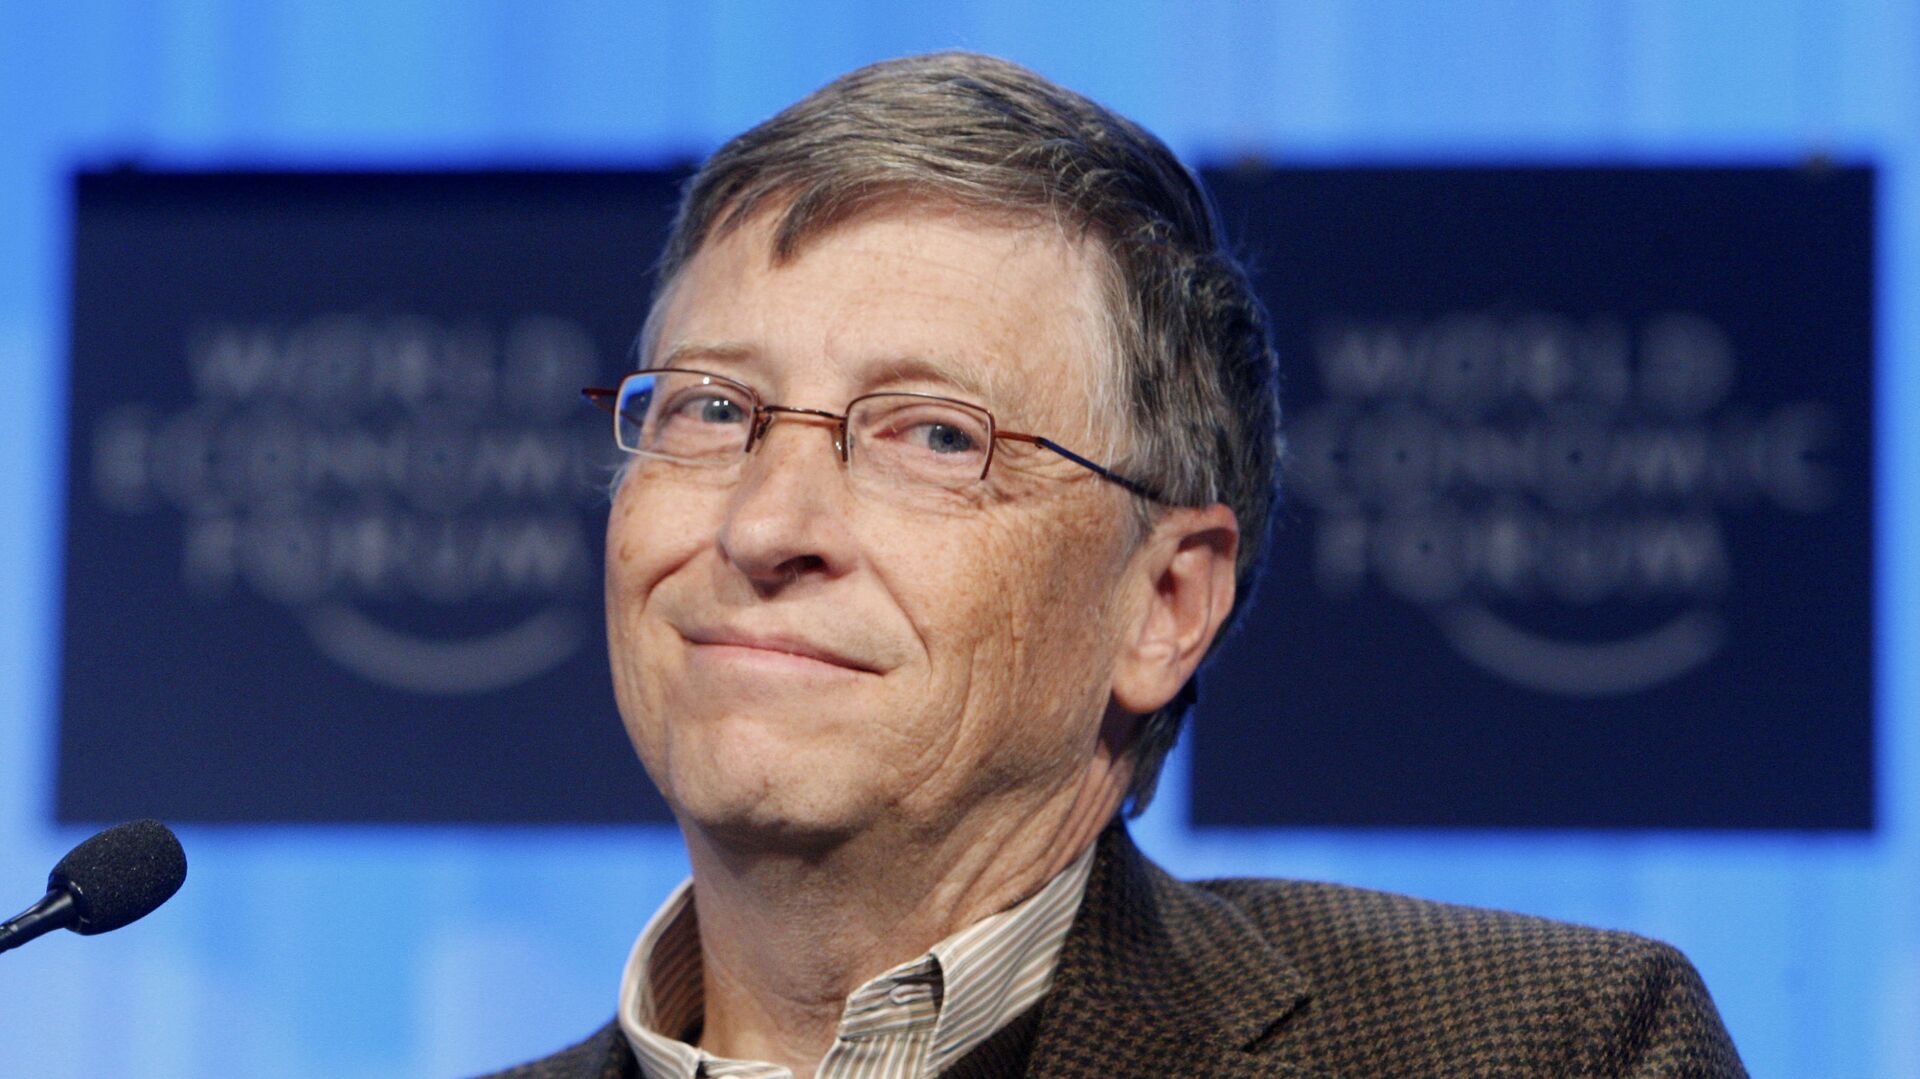 Microsoft founder Bill Gates looks on during a panel discussion on Meeting the Millennium Development Goals, at the World Economic Forum in Davos, Switzerland, Friday, Jan. 29, 2010 - Sputnik International, 1920, 09.02.2022